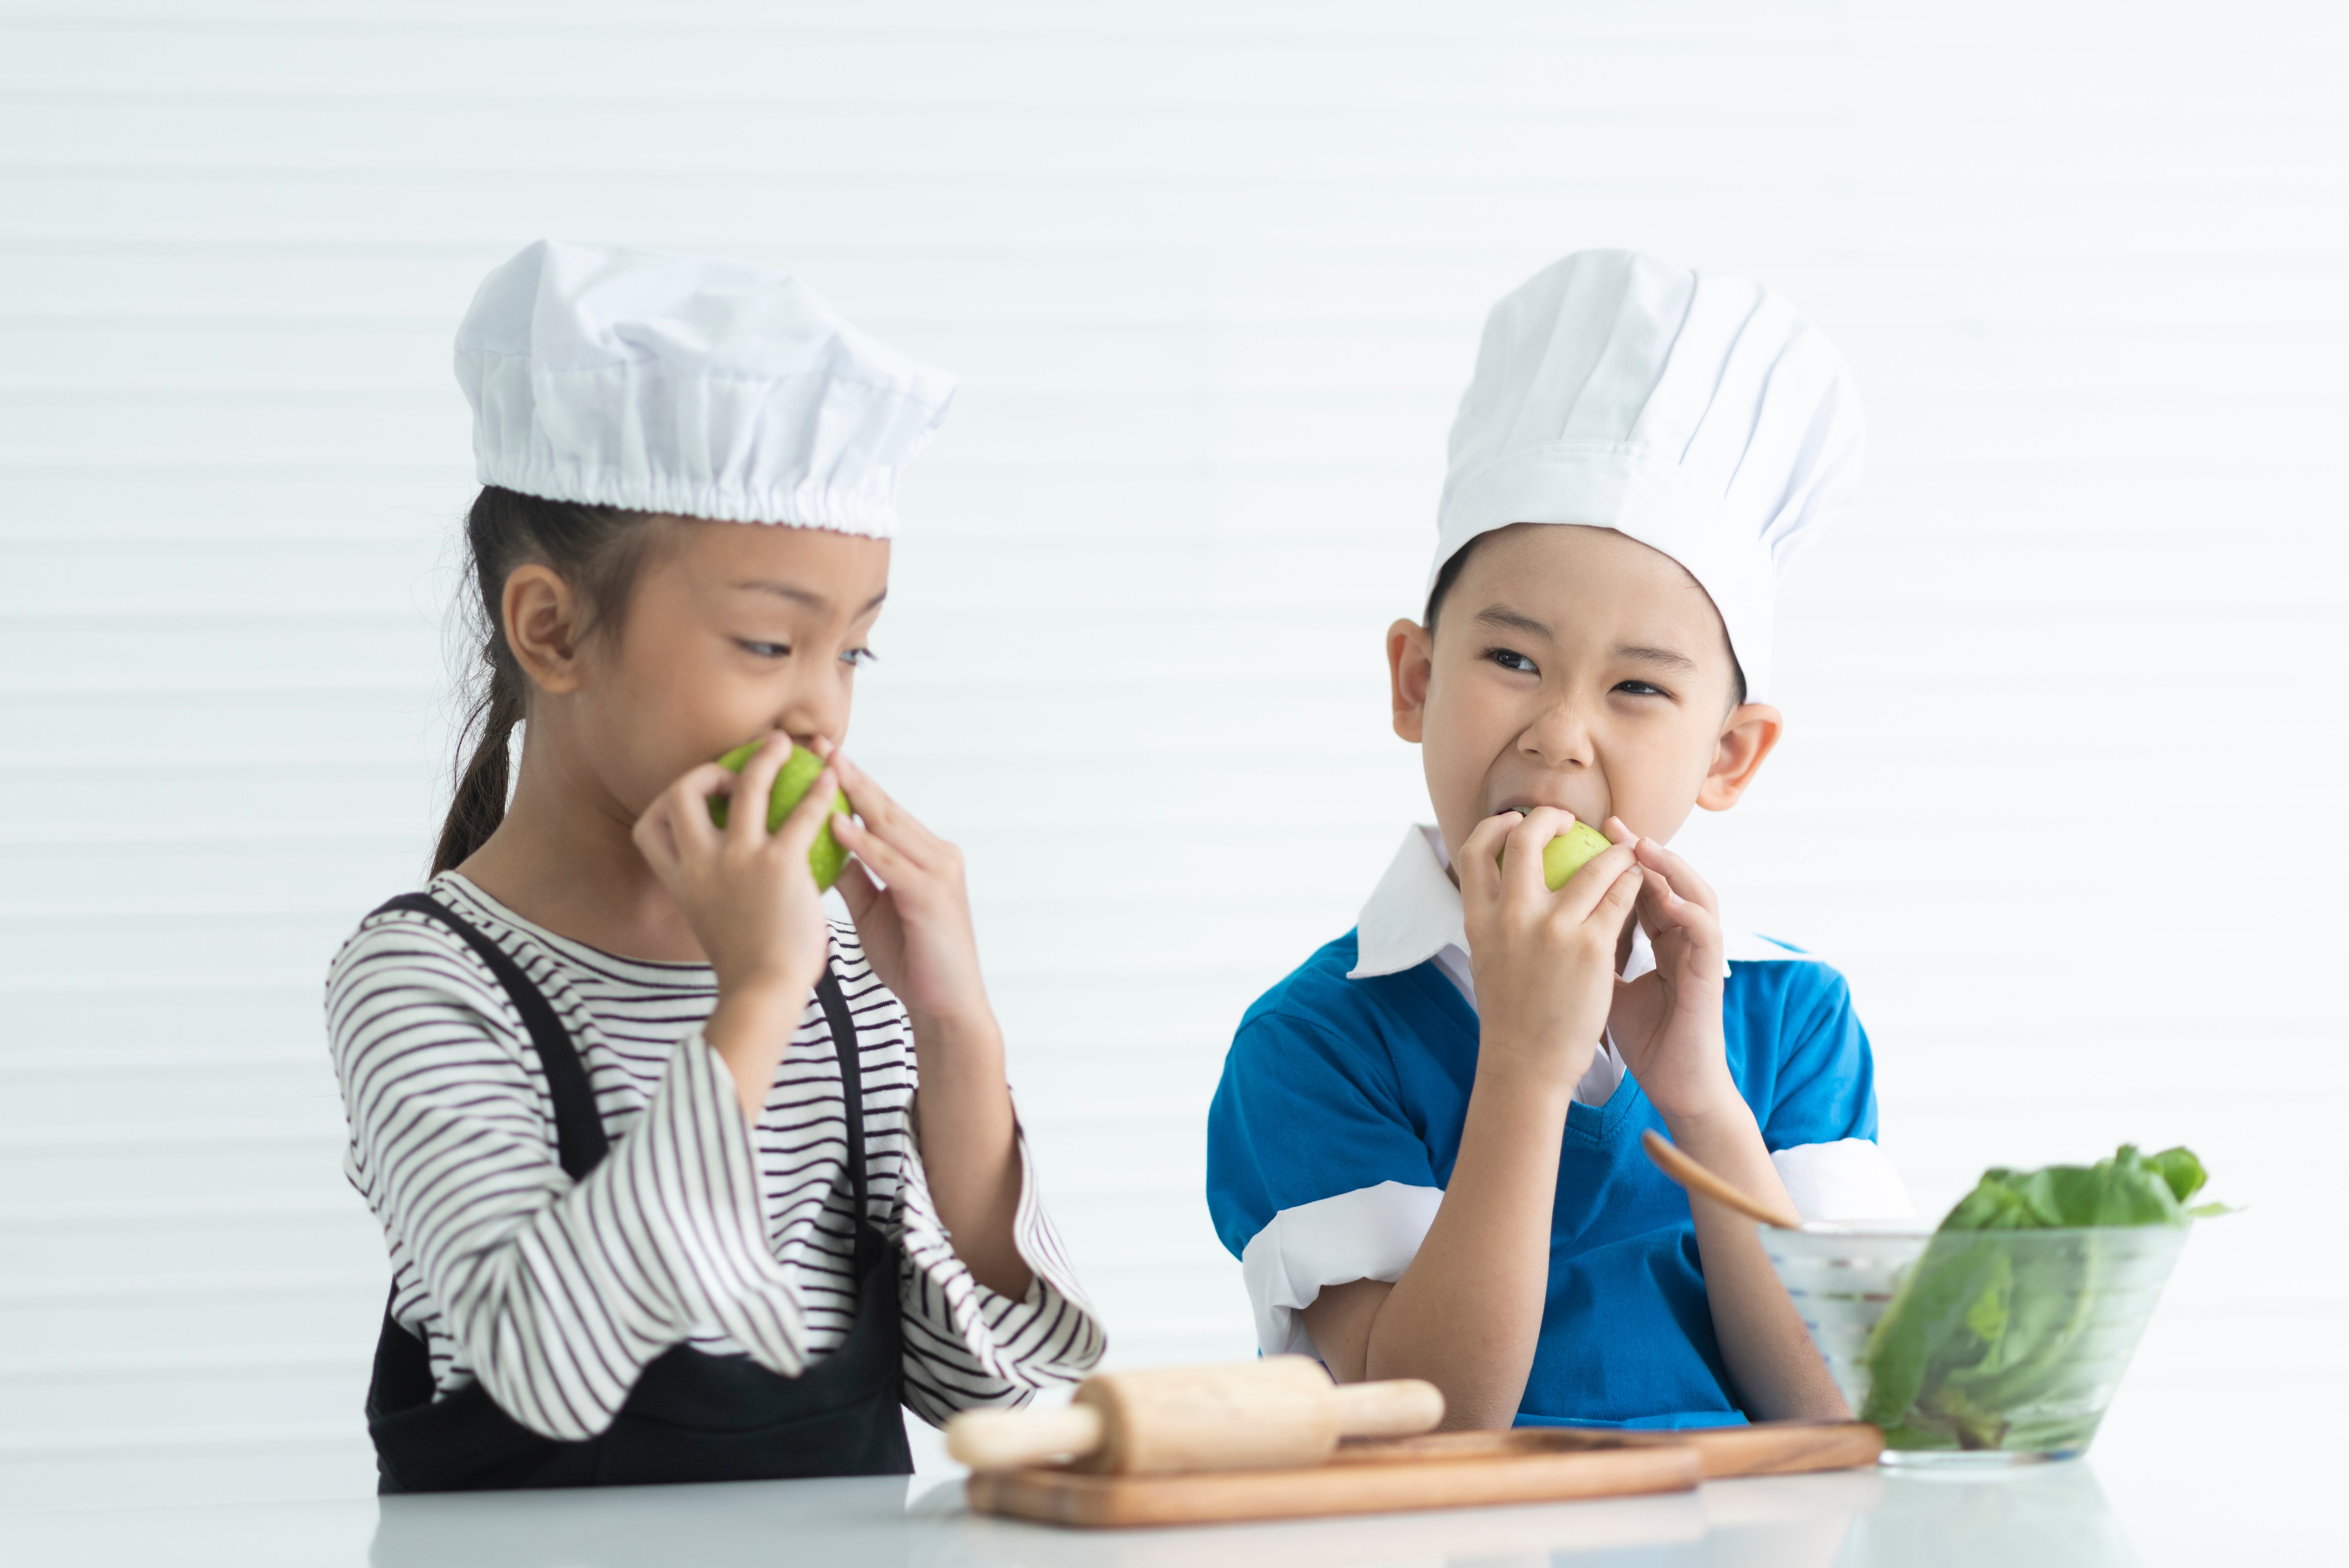 children-eating-green-apples-kitchen-concept-2022-12-16-02-59-50-utc